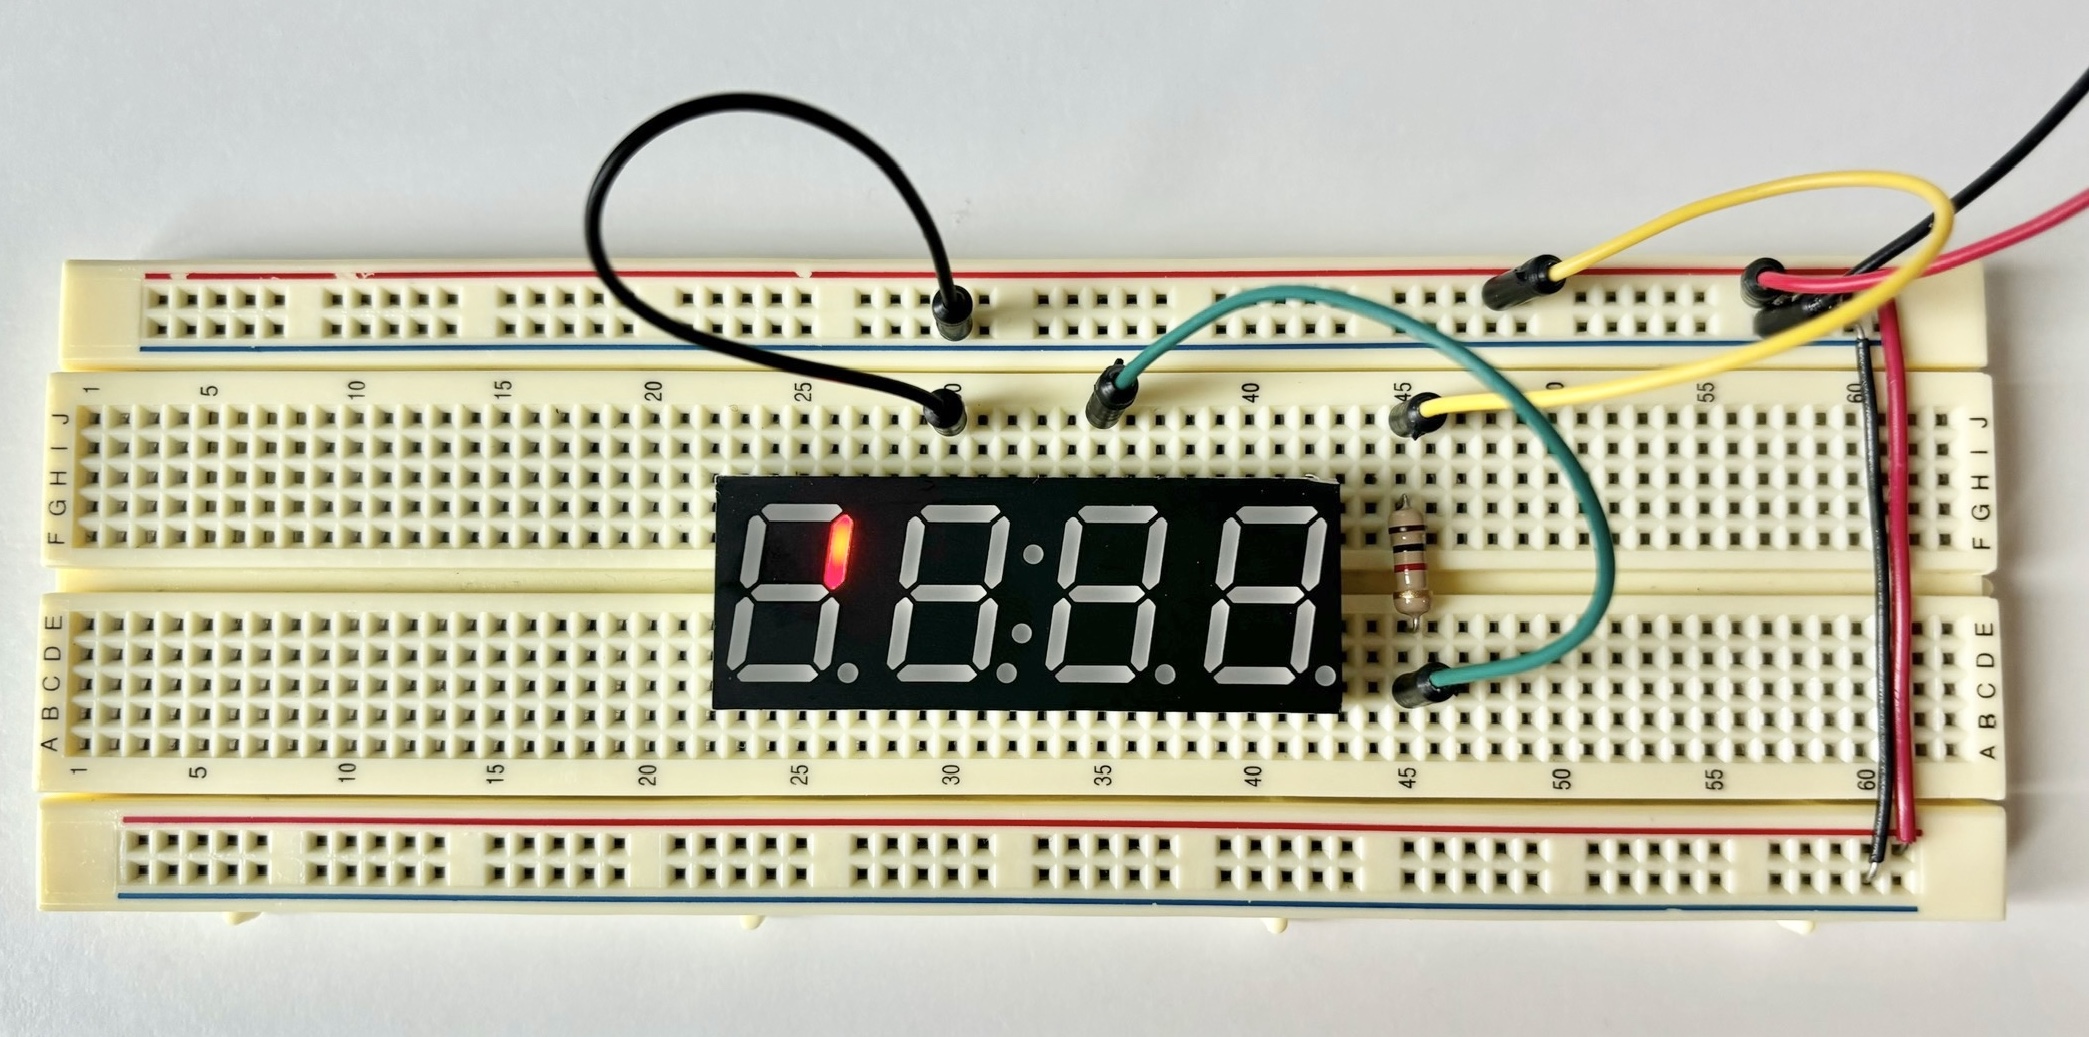 Test circuit for segment B digit 1